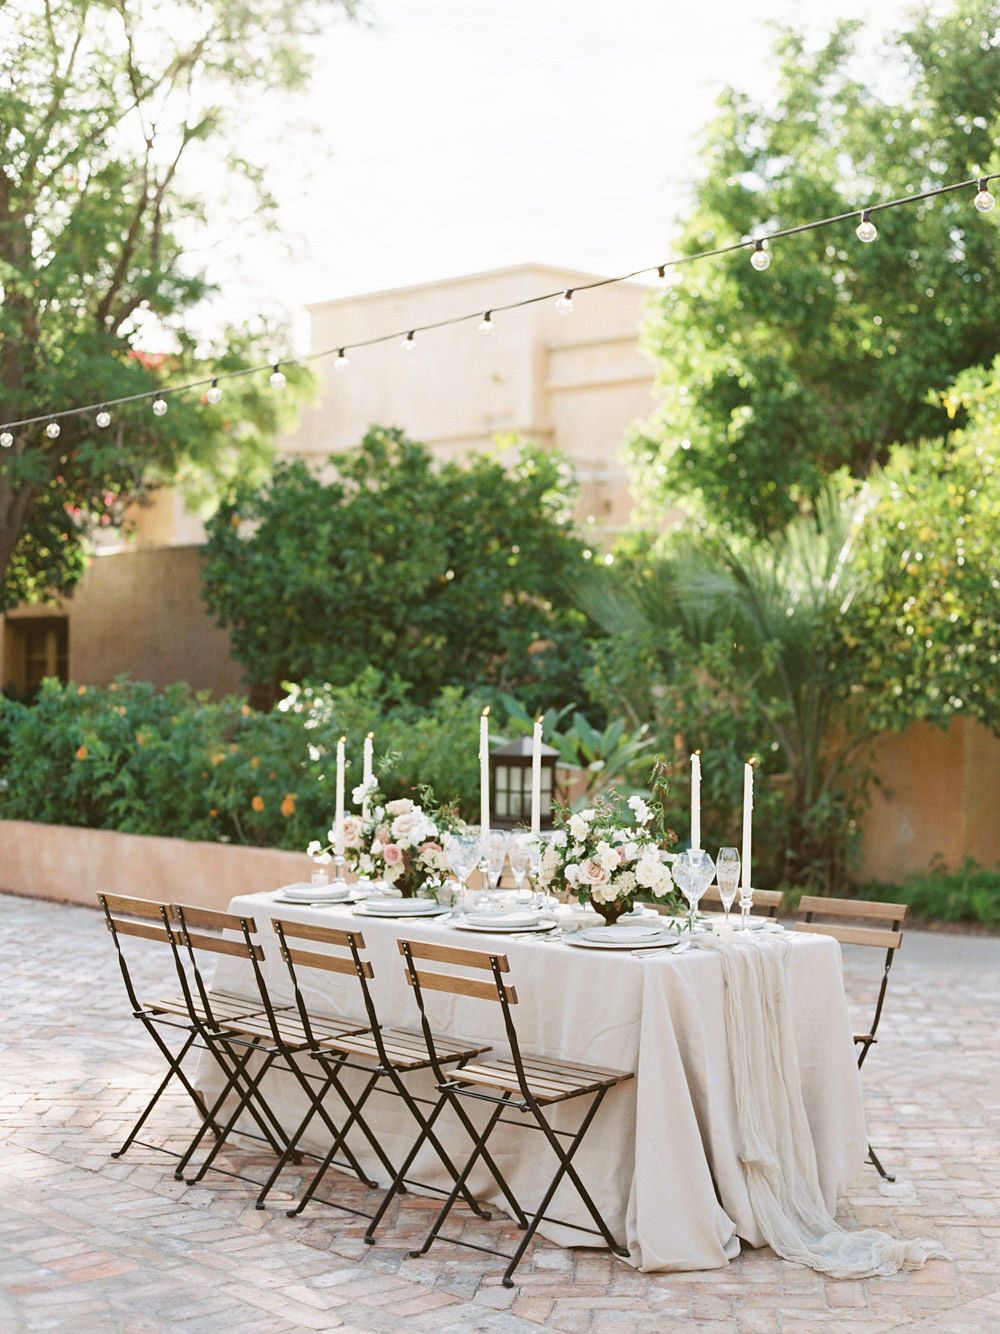 WEDDING SPARROW / Desert inspired wedding ideas with Blush Roses & European influences